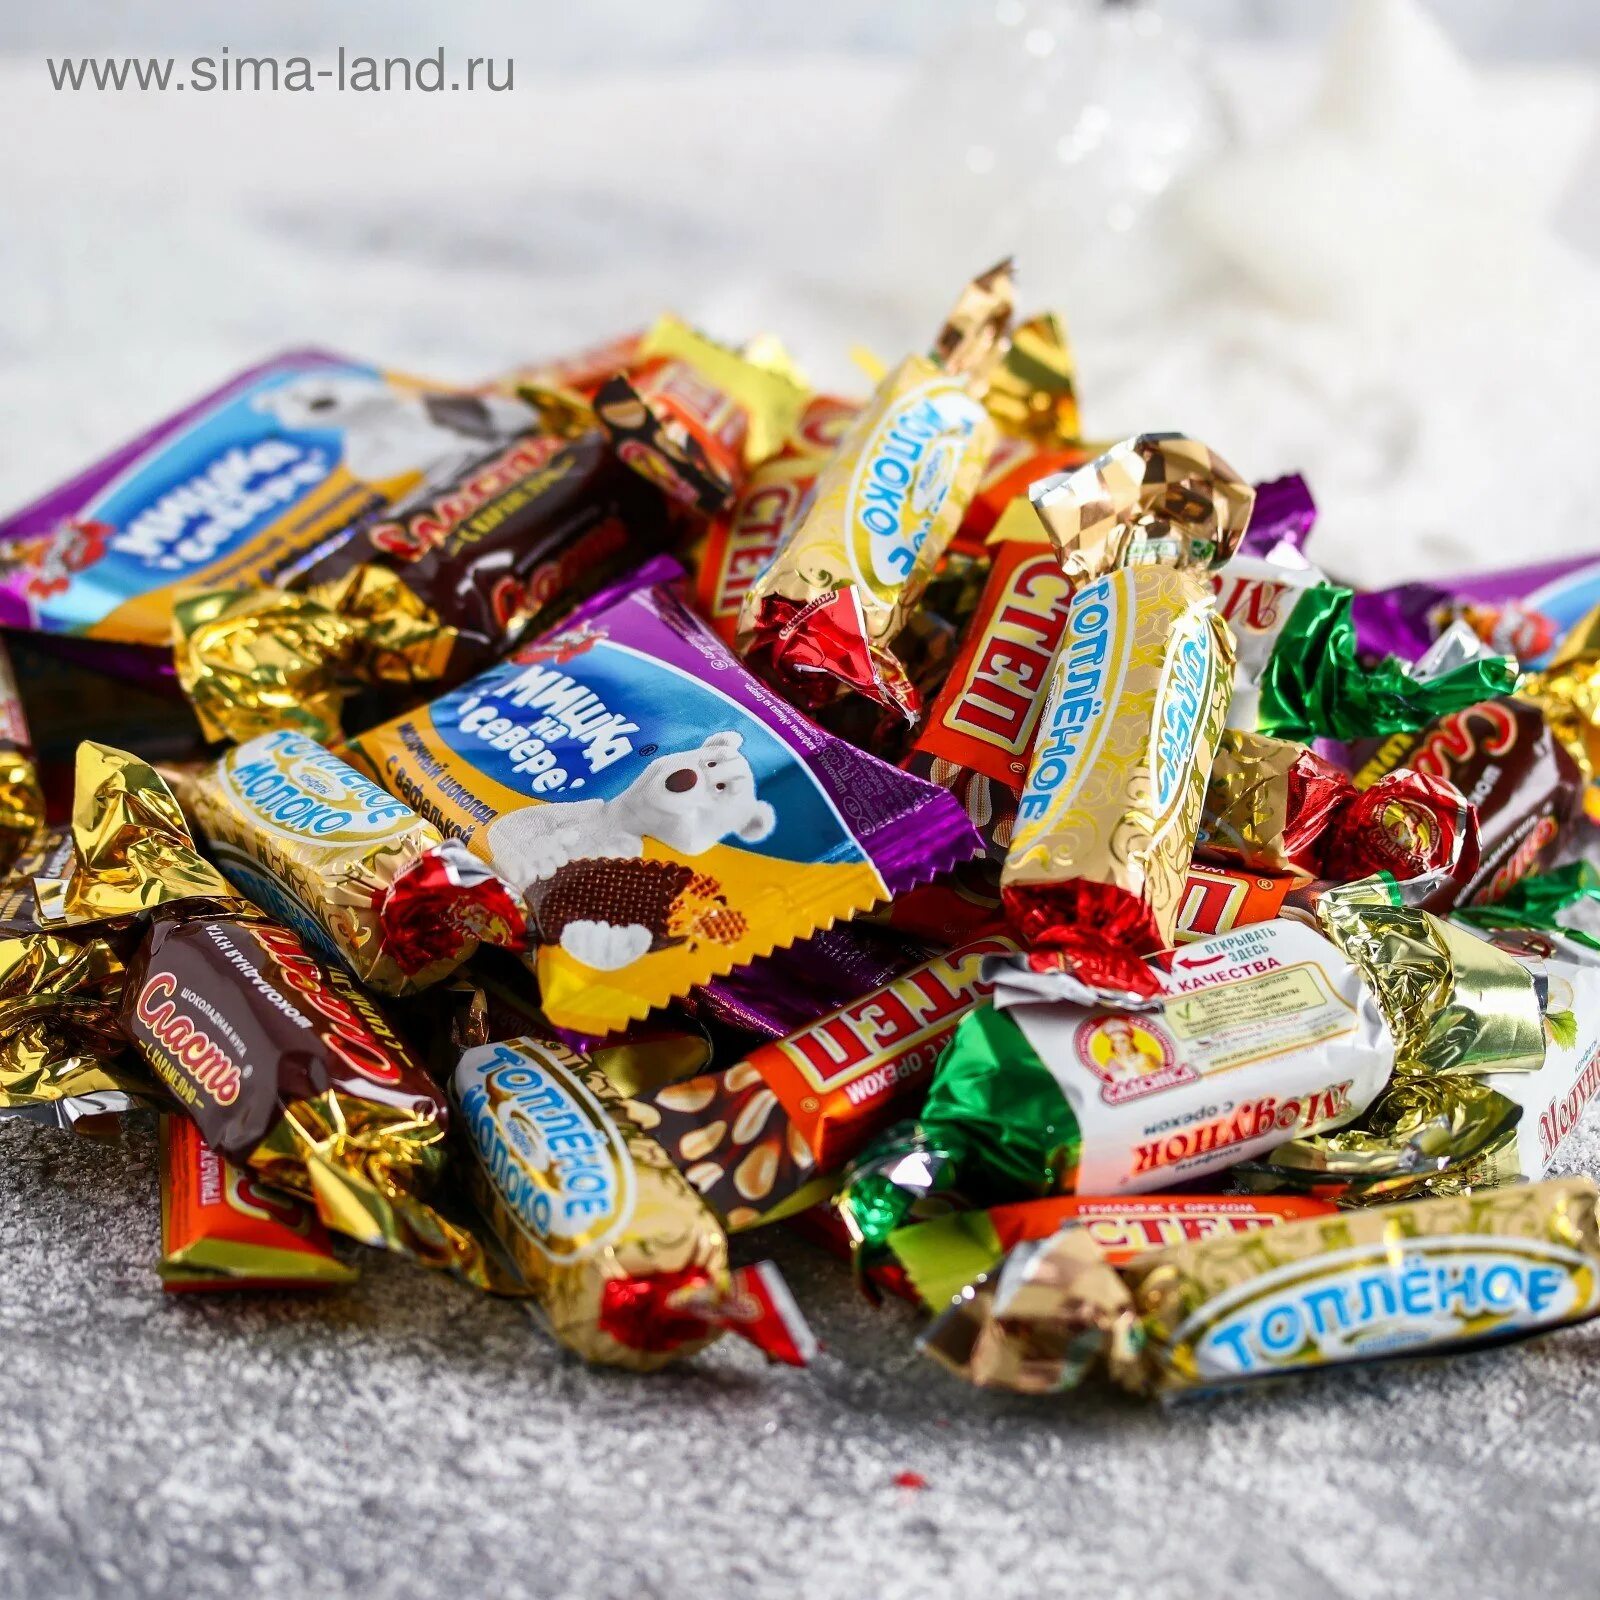 Сладости килограммами. Украинские конфеты. UKRICKIE kofeti. Конфеты кг. Украинские сладости конфеты.